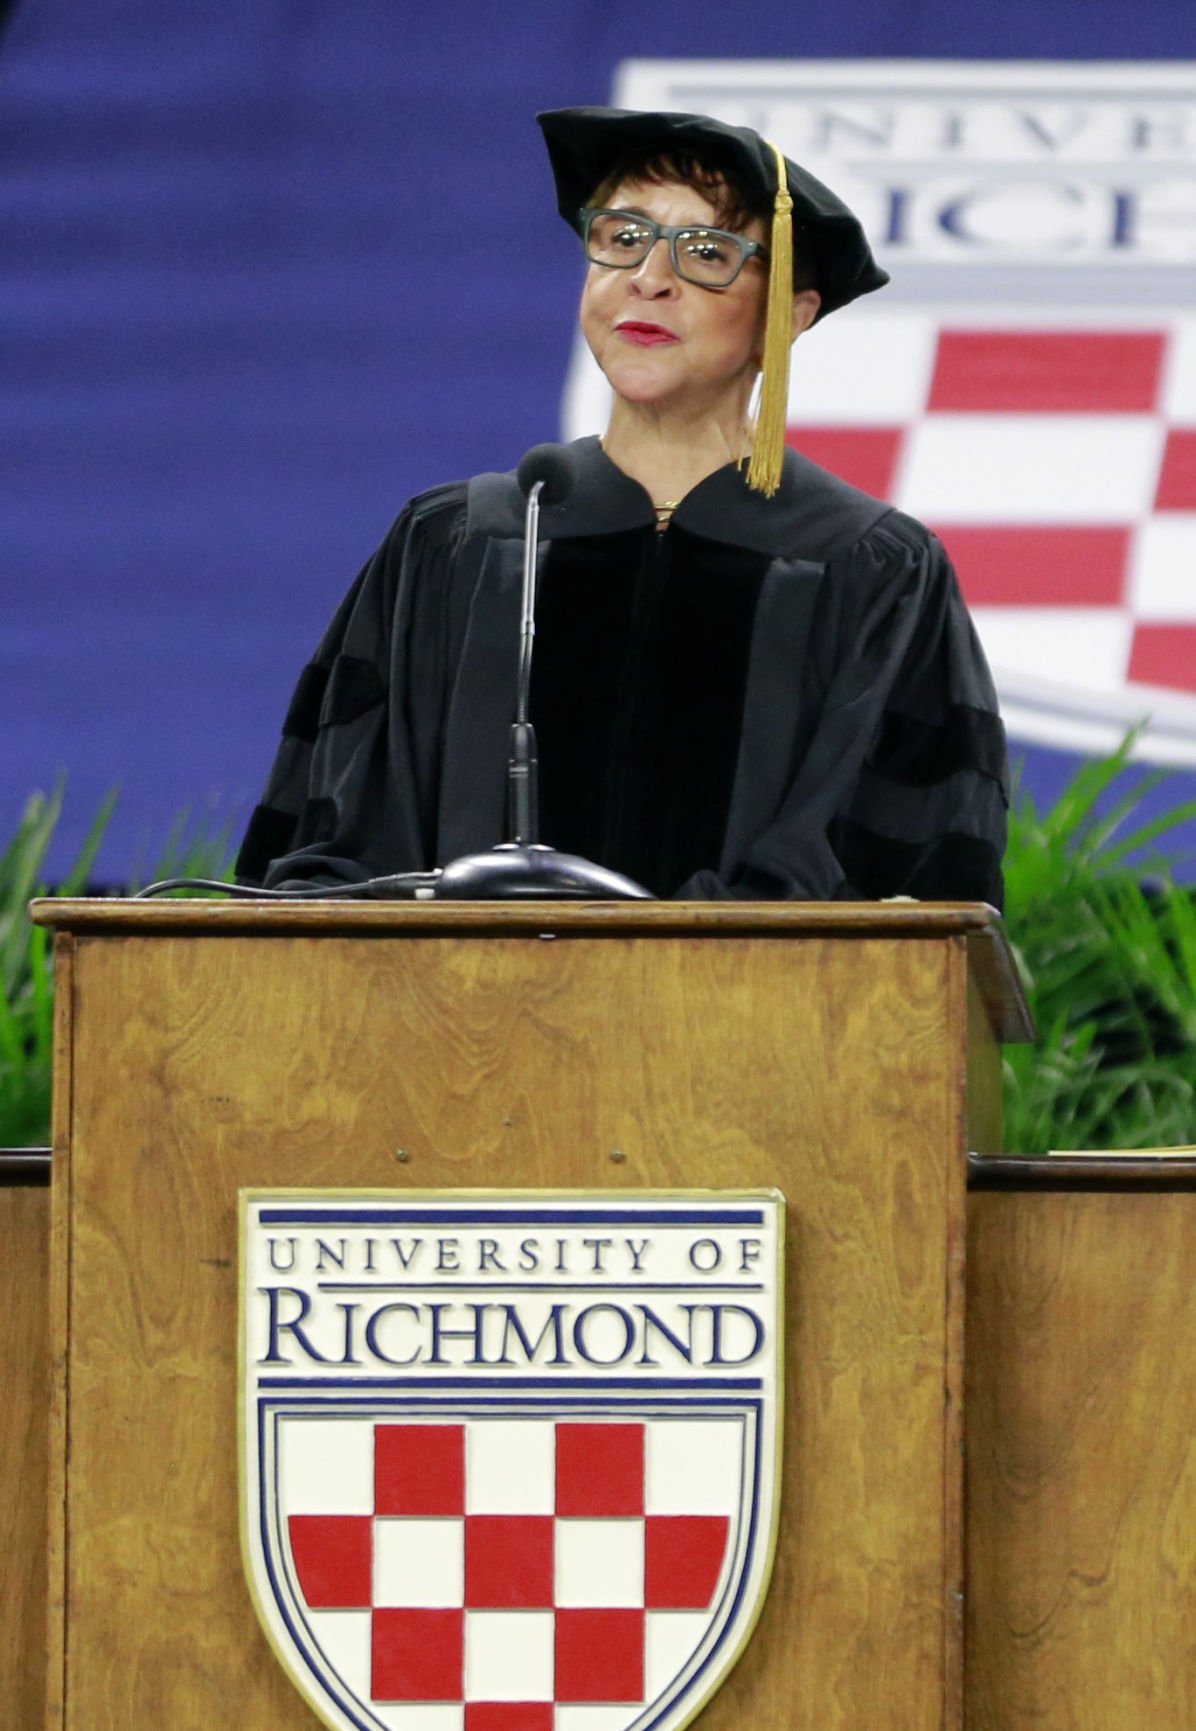 PHOTOS University of Richmond Commencement Ceremony News